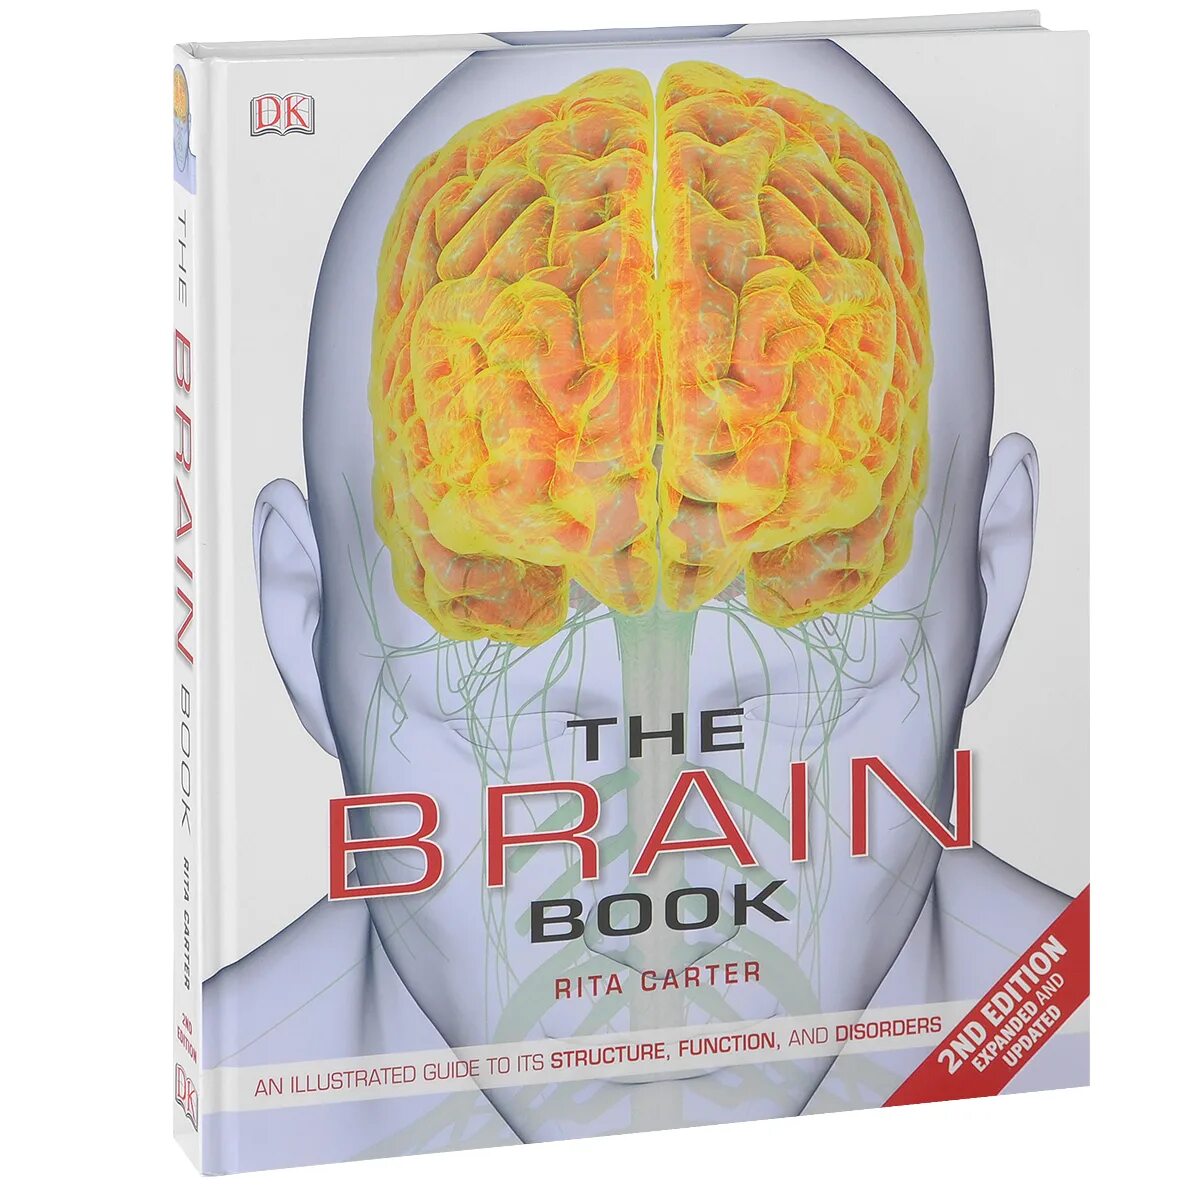 Книга мозг. Книга про мозг человека. Книга мозг the Brain. Том Вуджек книги.